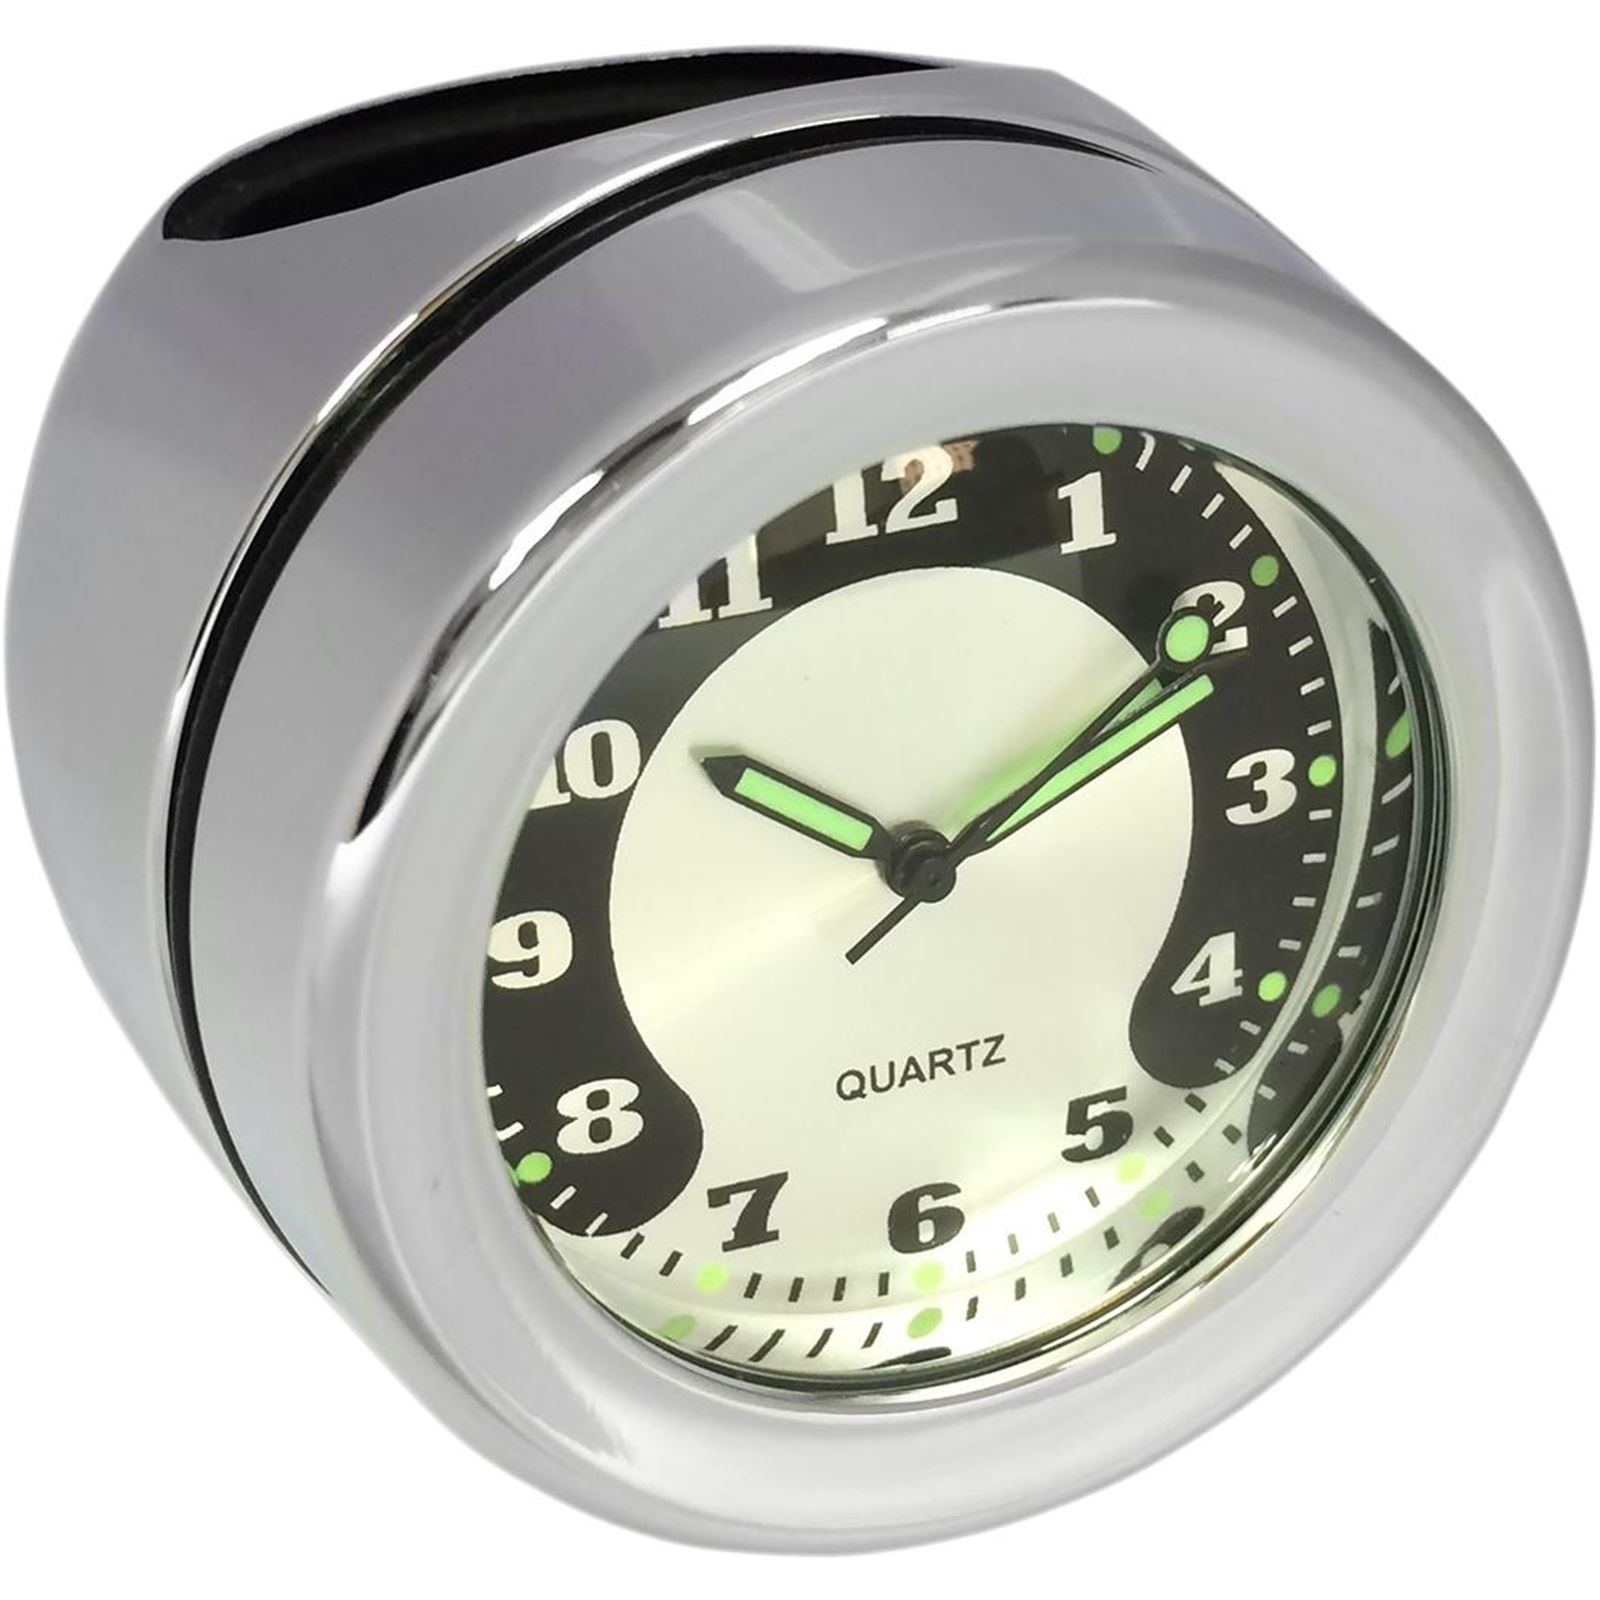 Drag Specialties Handlebar Mount Clock - Chrome - For 1.25" Bar